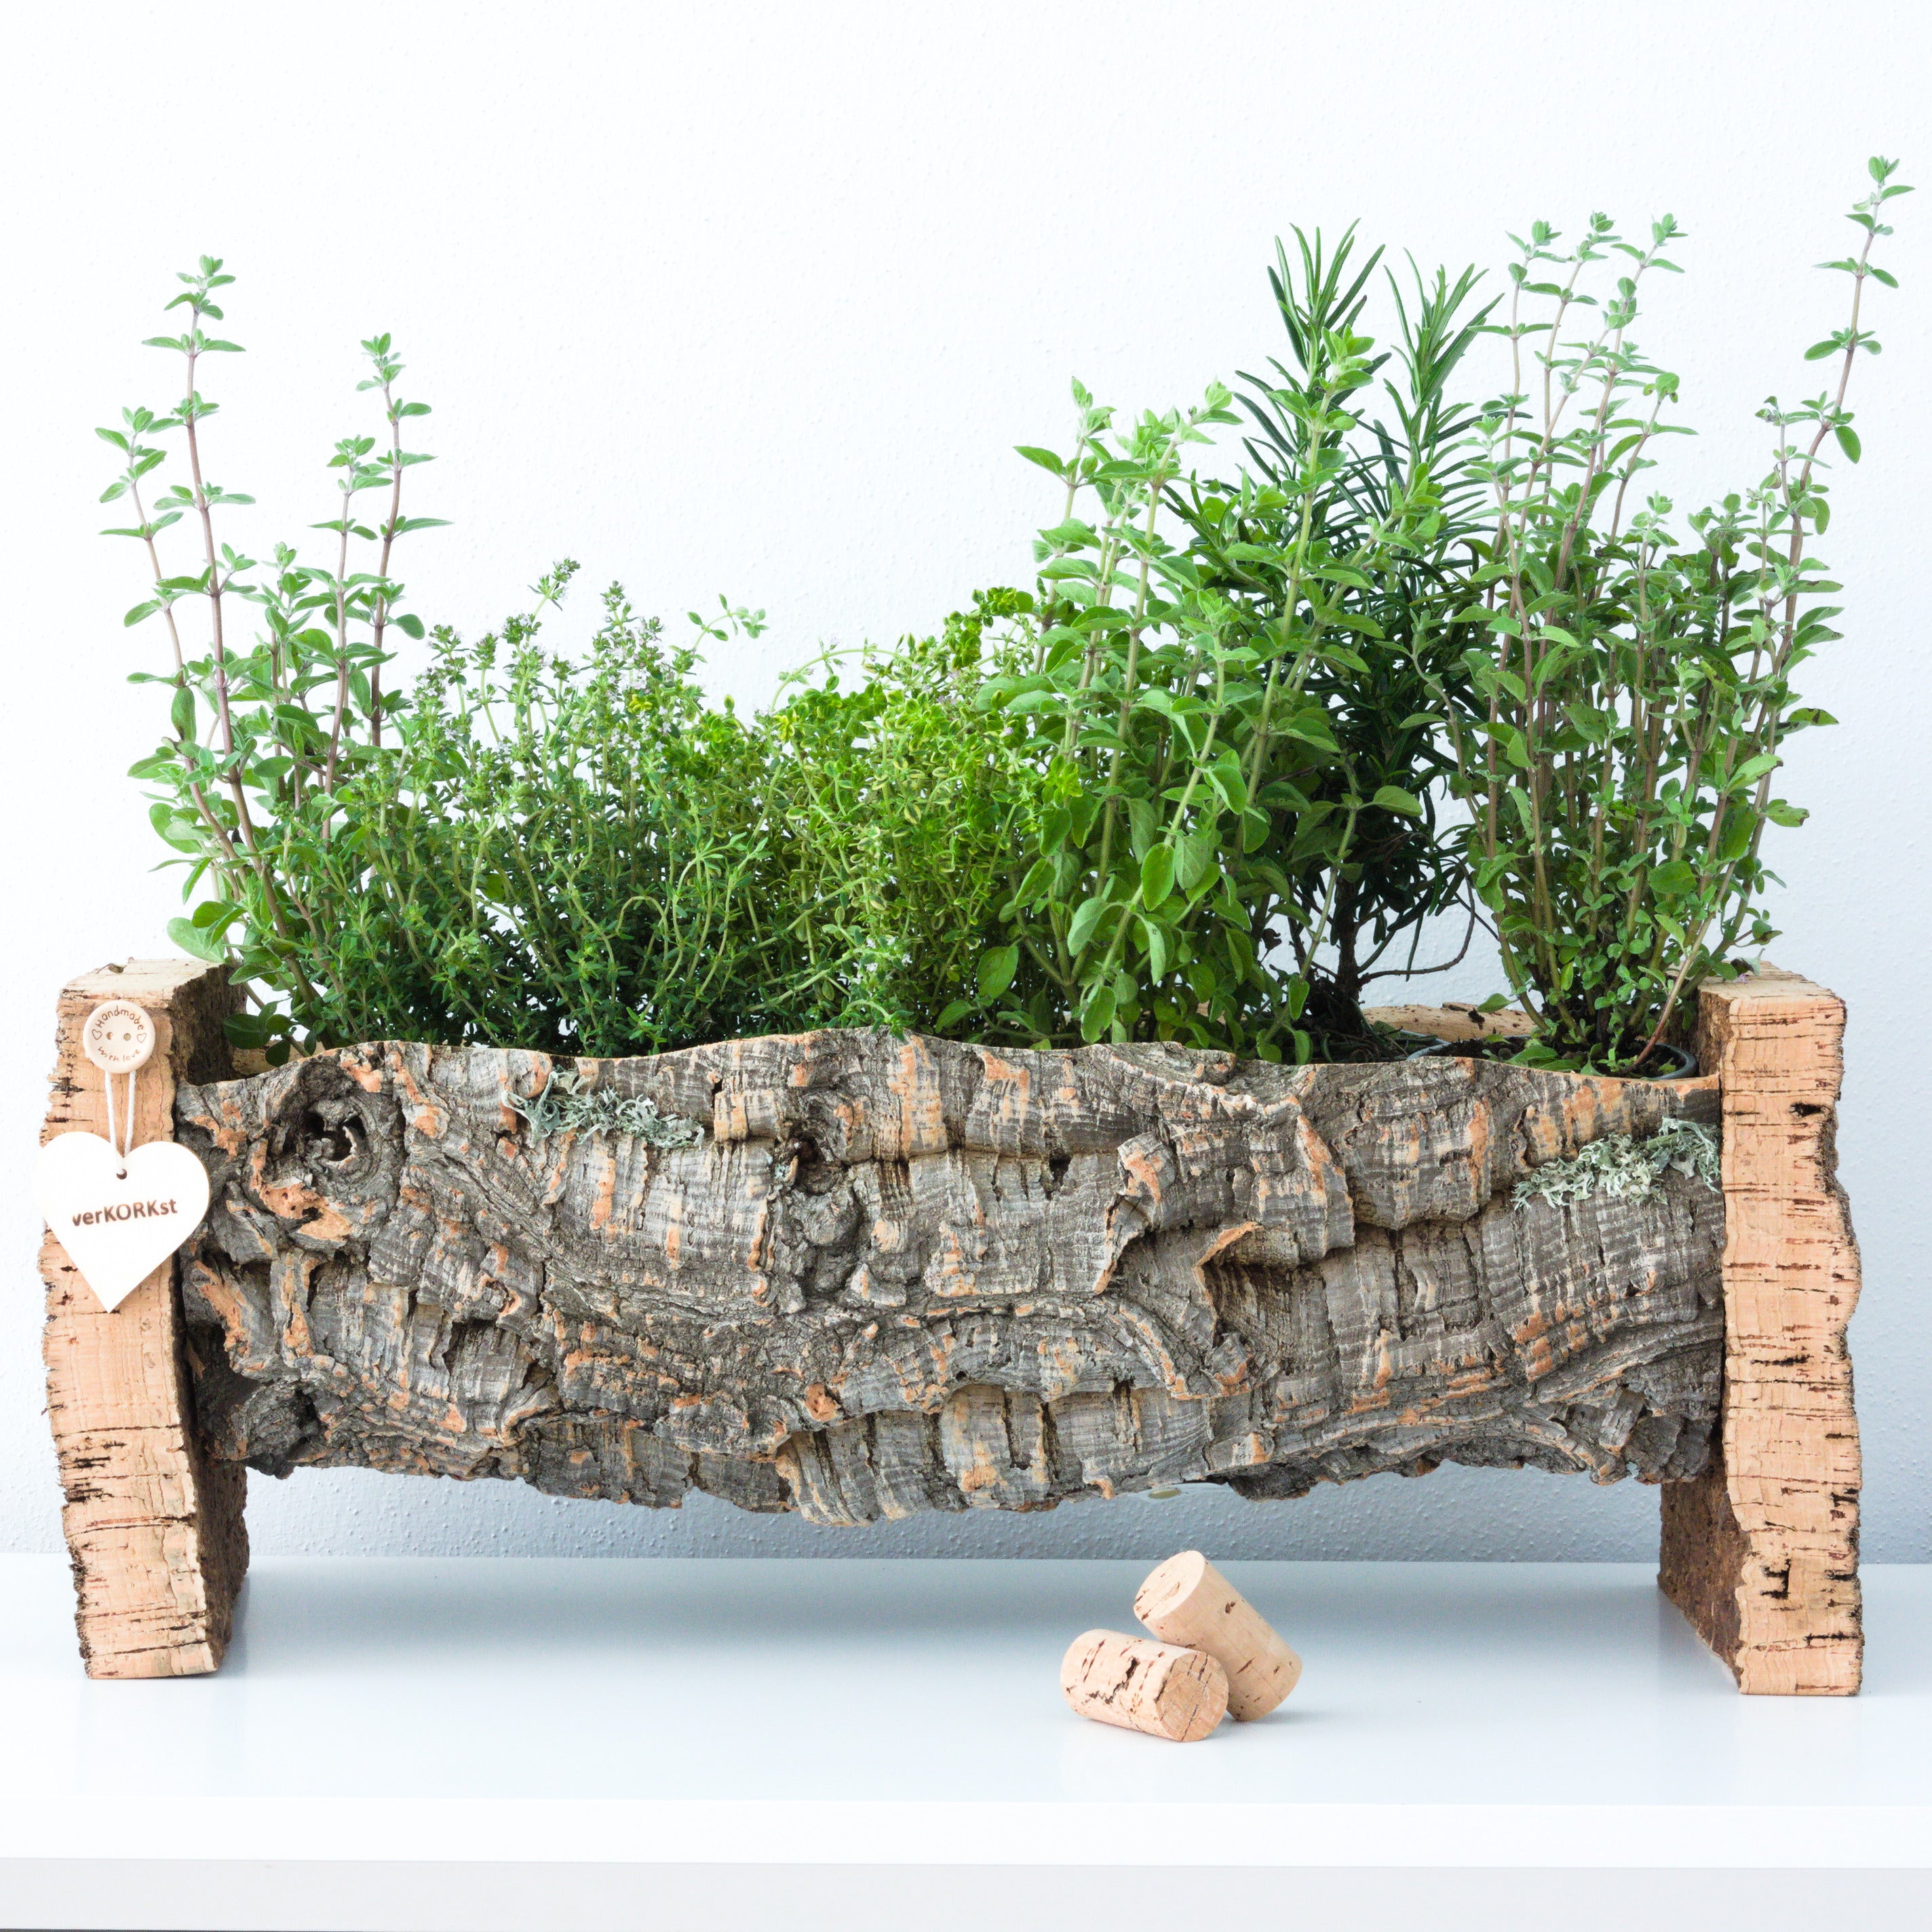 VERKORKst premium plant trough made of cork bark * Rustic herb pot * Vintage flower pot for the kitchen, living room, garden and balcony